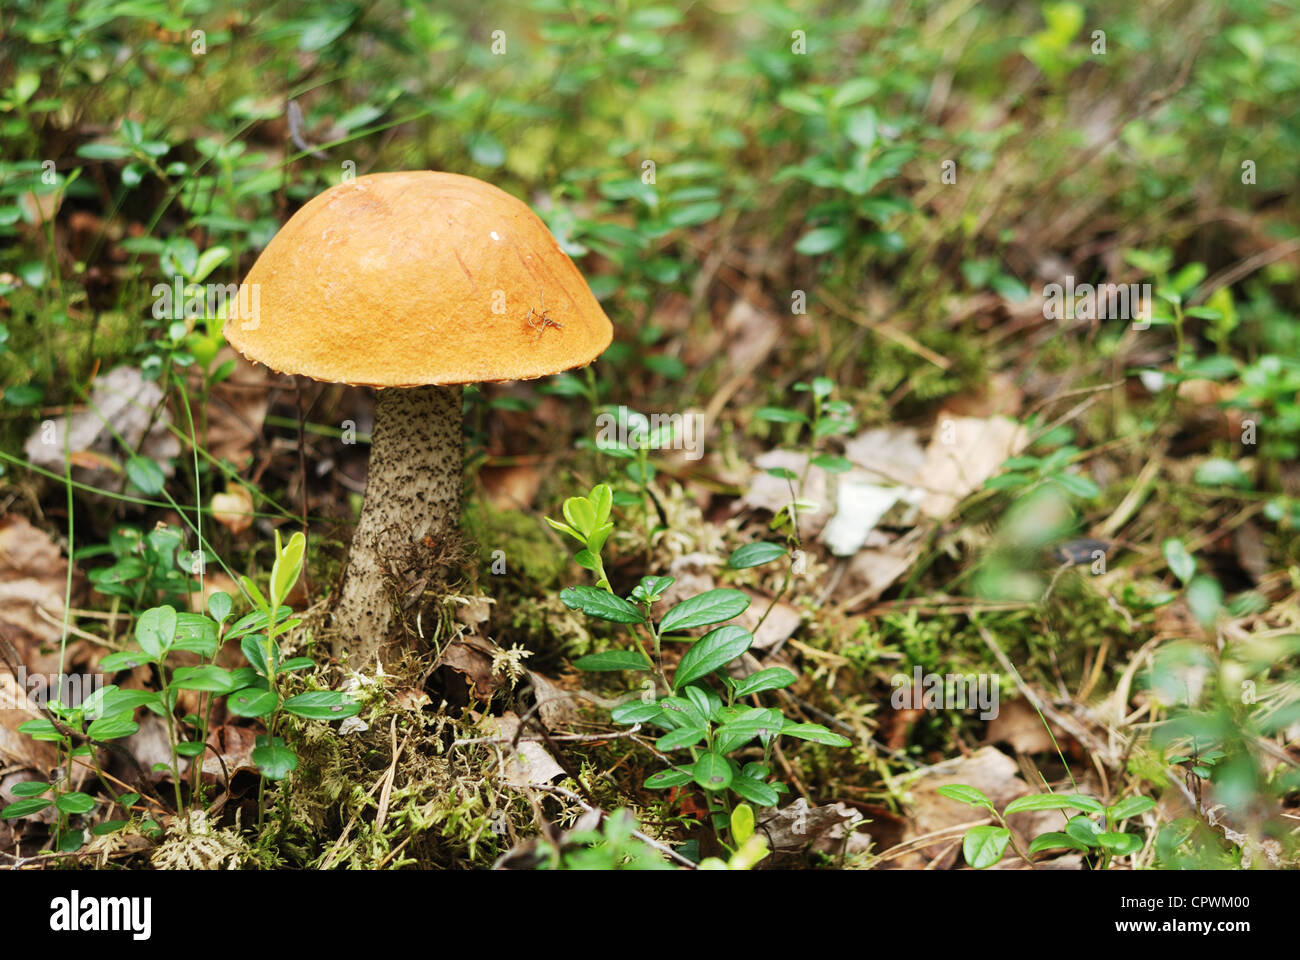 very beatiful boletus mushroom in natural enviroment Stock Photo